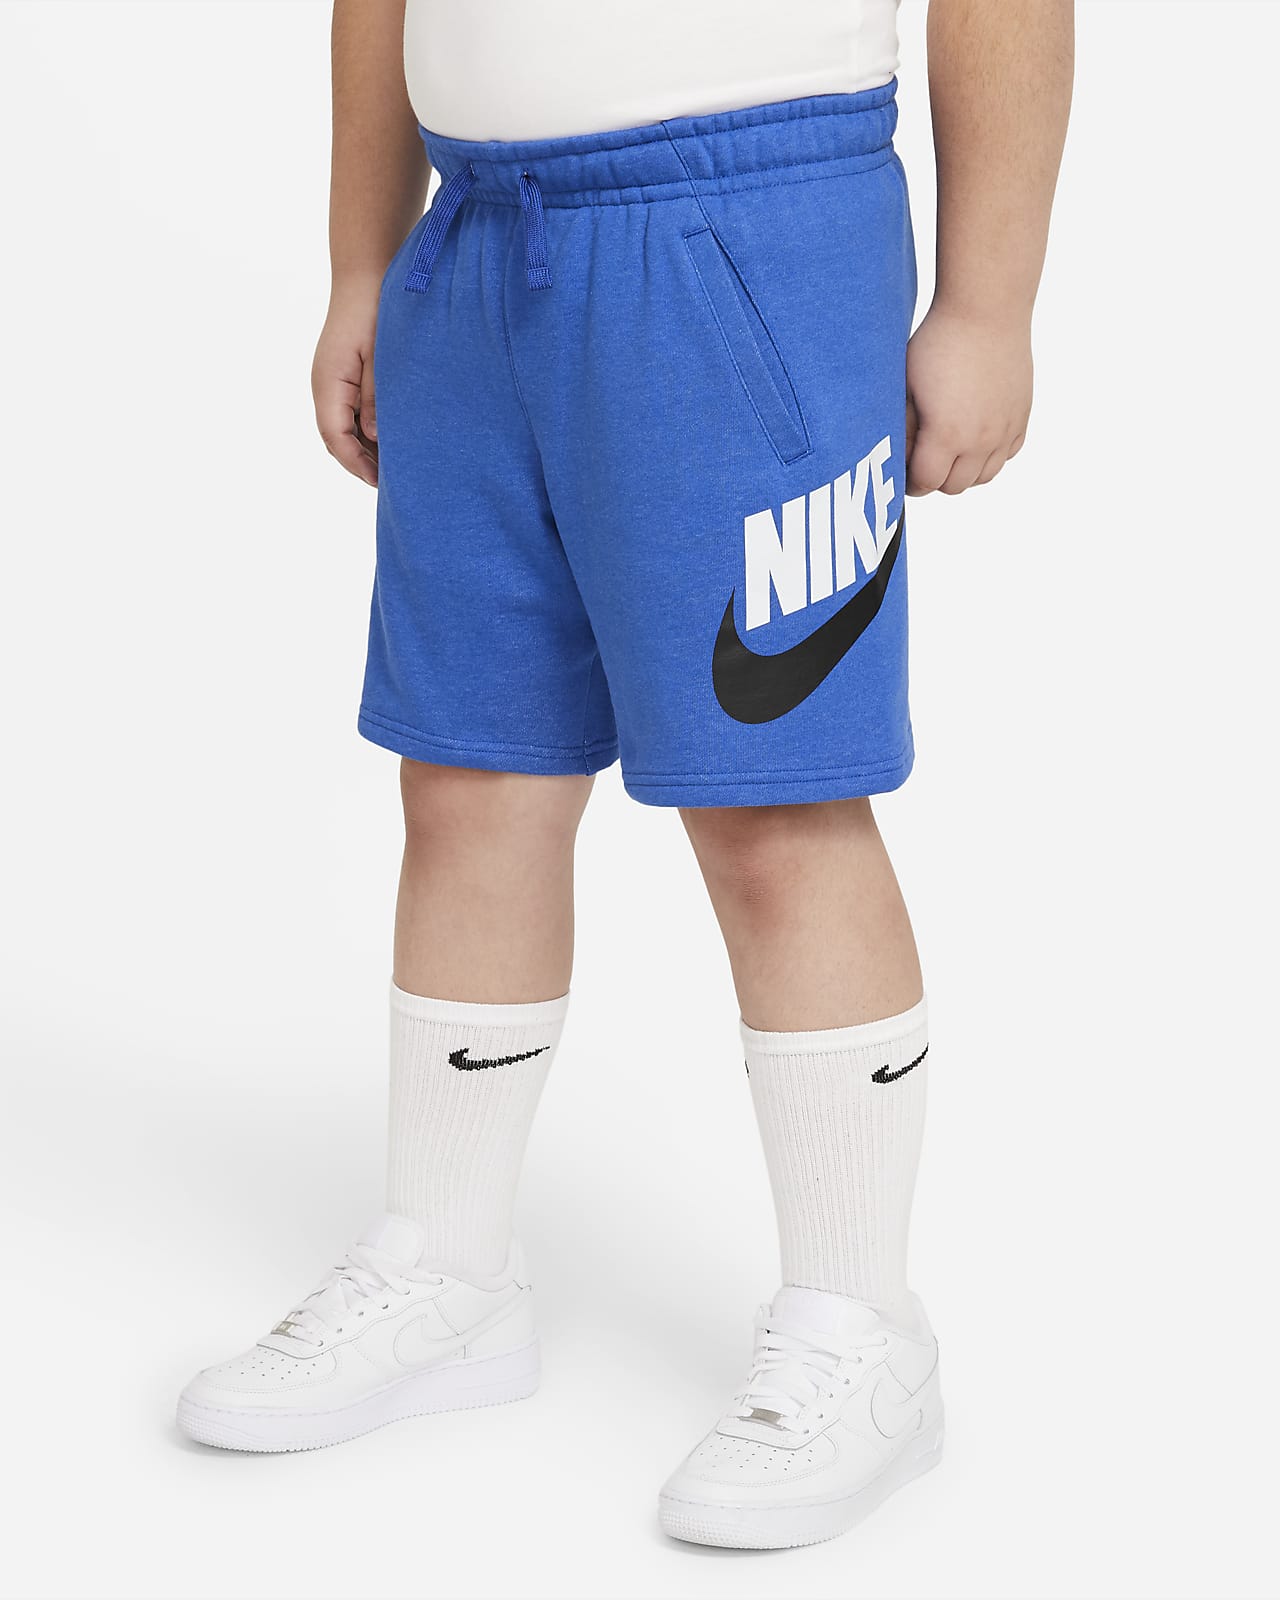 Shorts para niño talla grande Nike Sportswear Club (talla extendida)